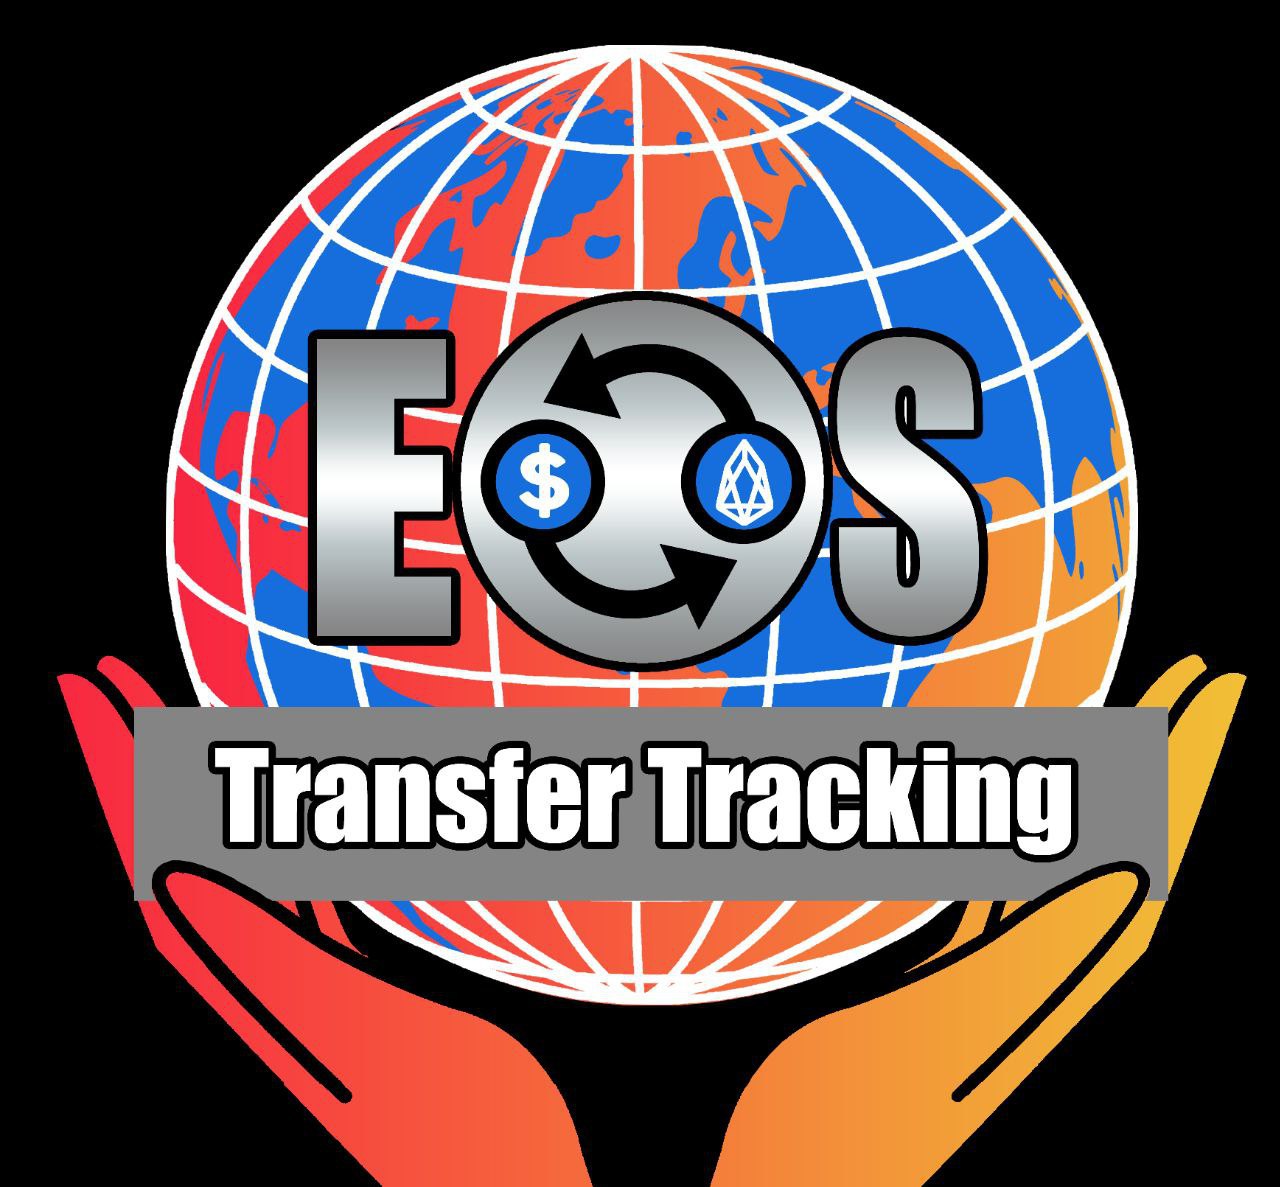 Transfers tracker